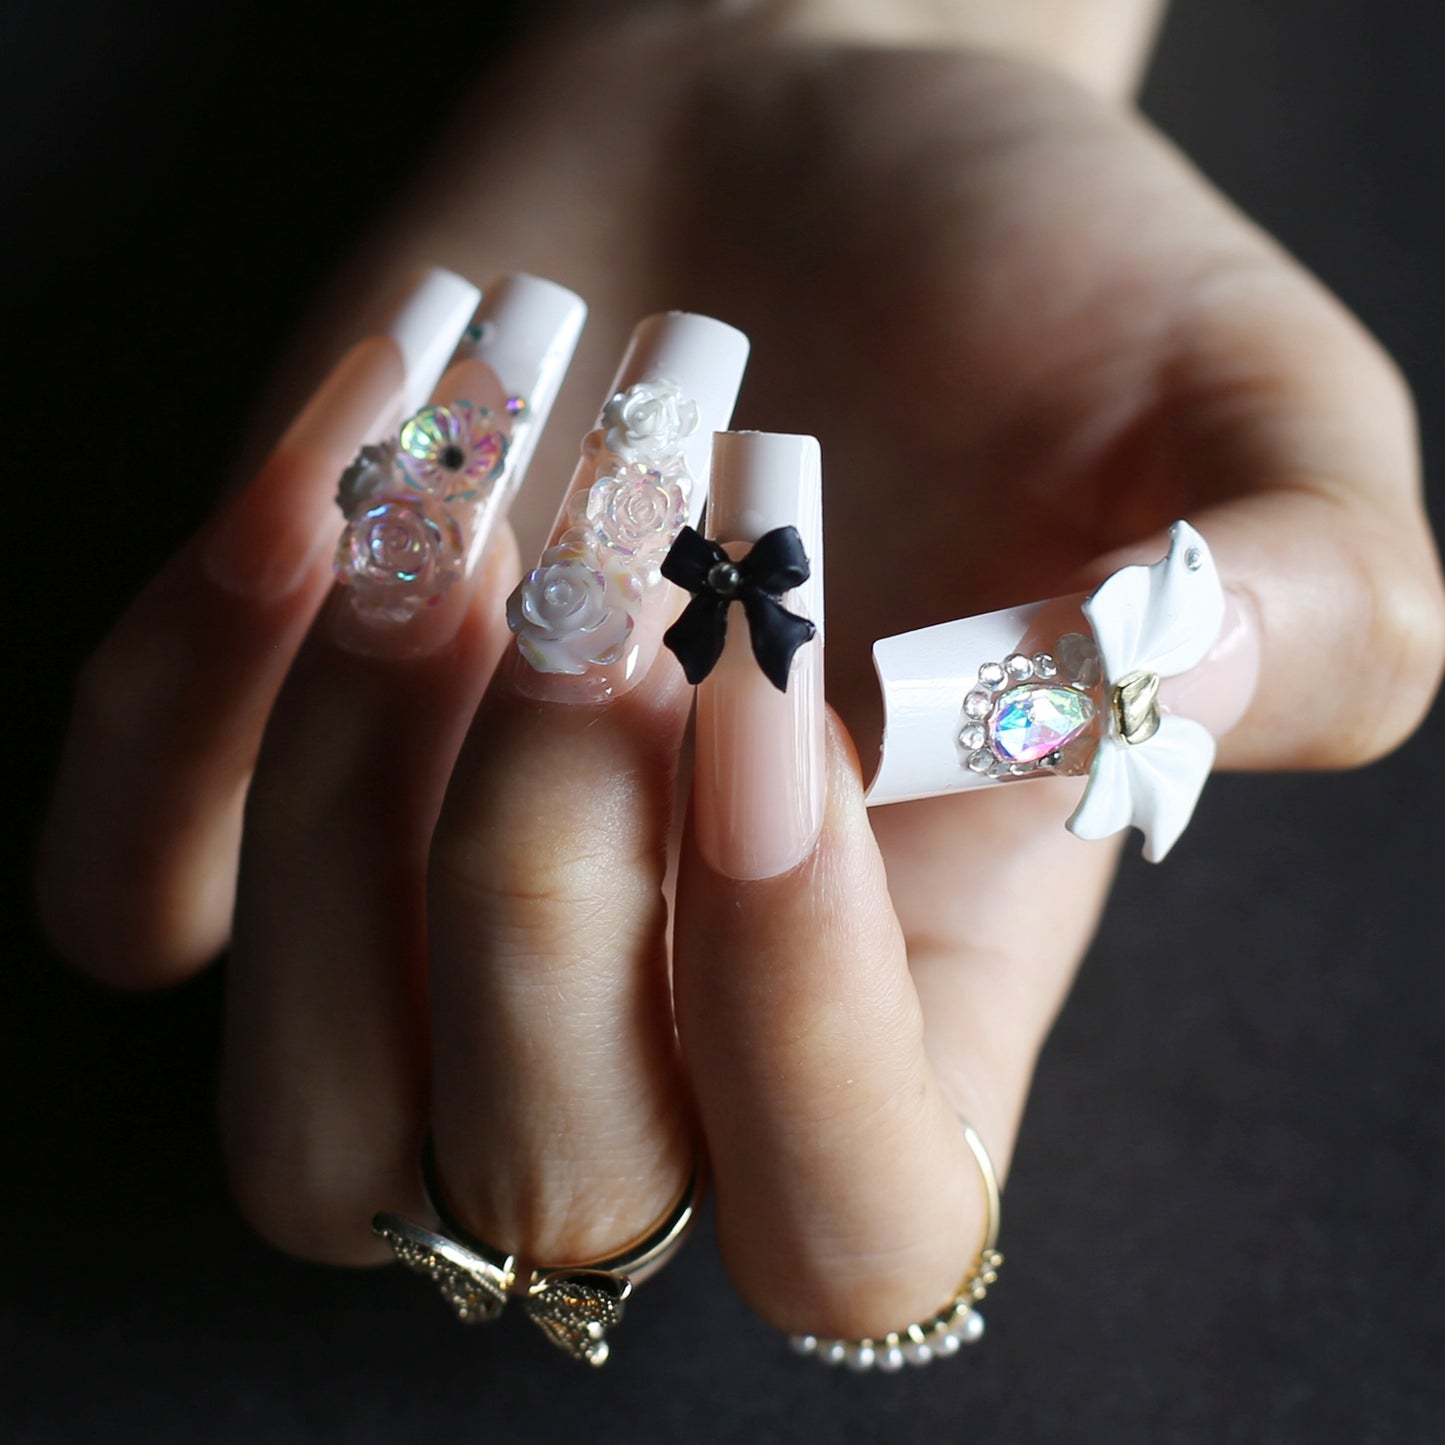 Luxury Extra Long Rectangular French Art Petal Nails Handmade